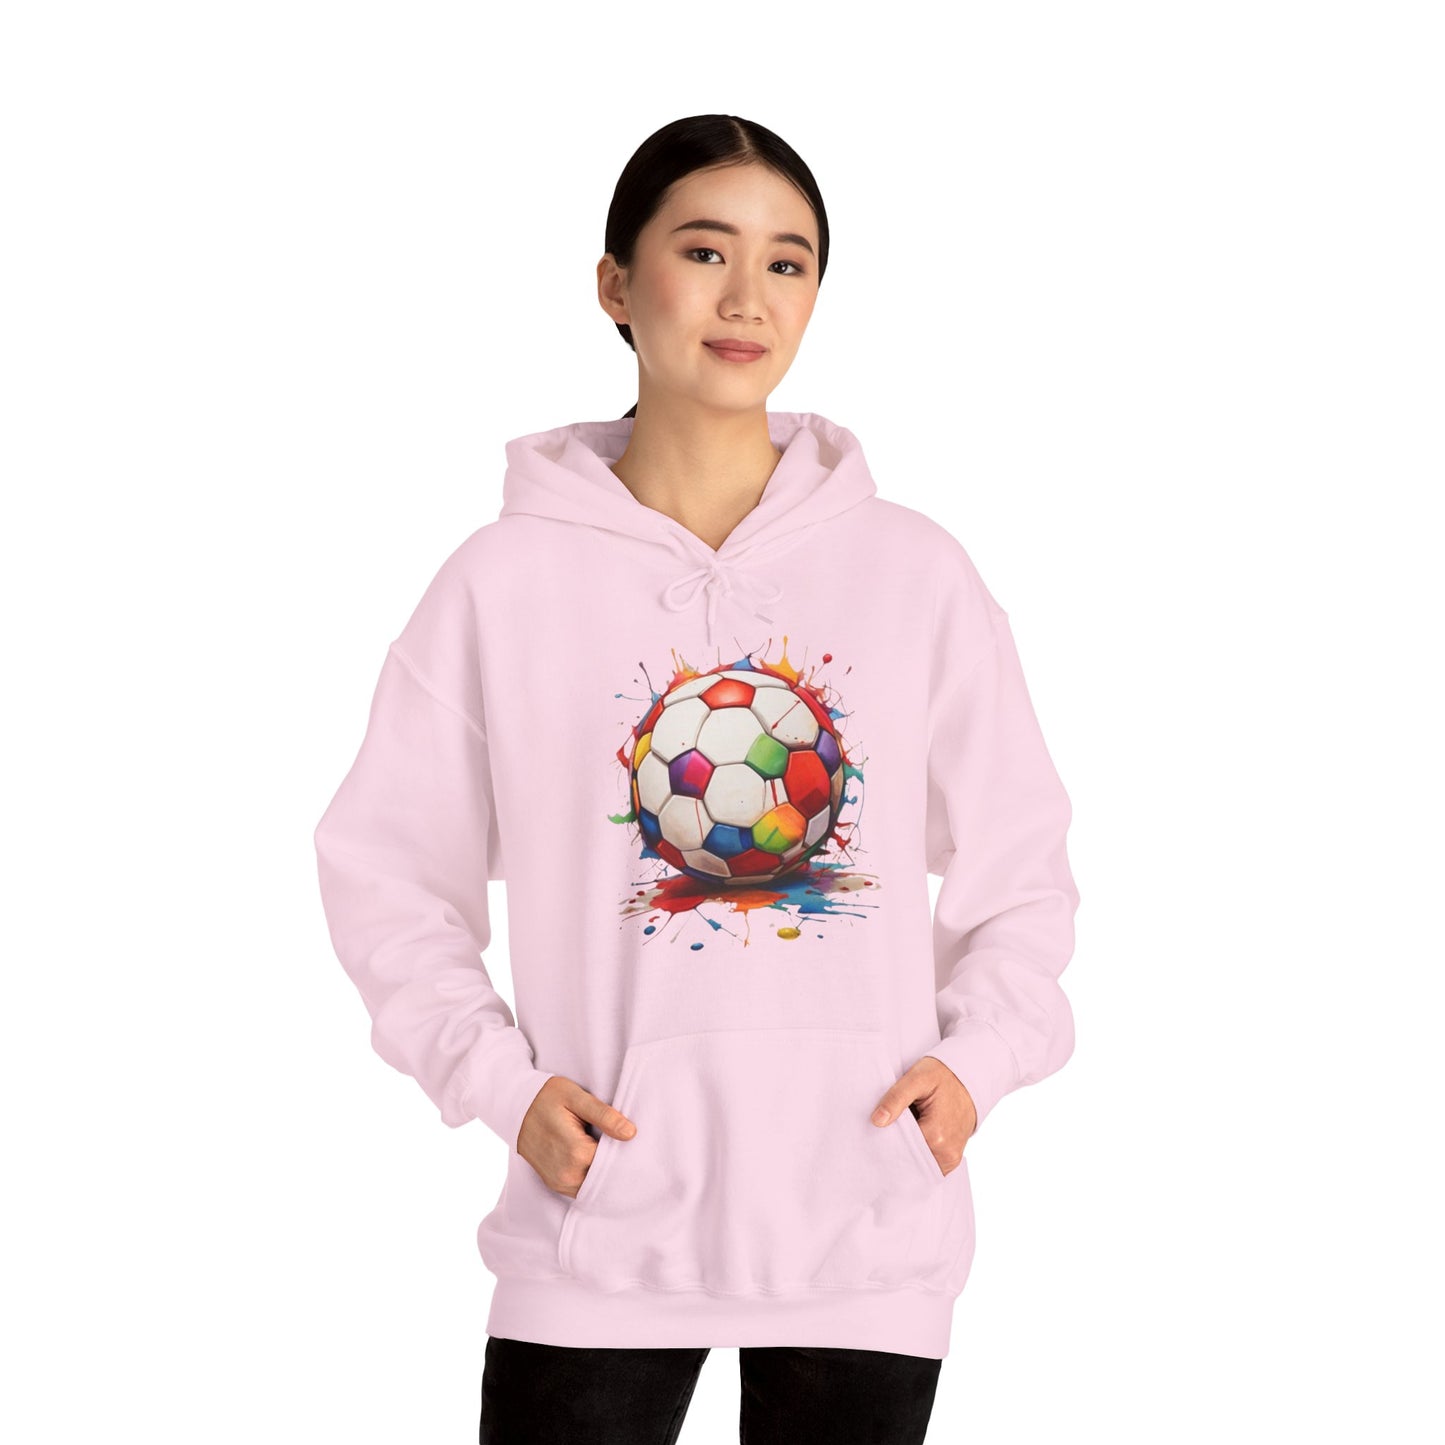 Colourful Messy Football - Unisex Hooded Sweatshirt